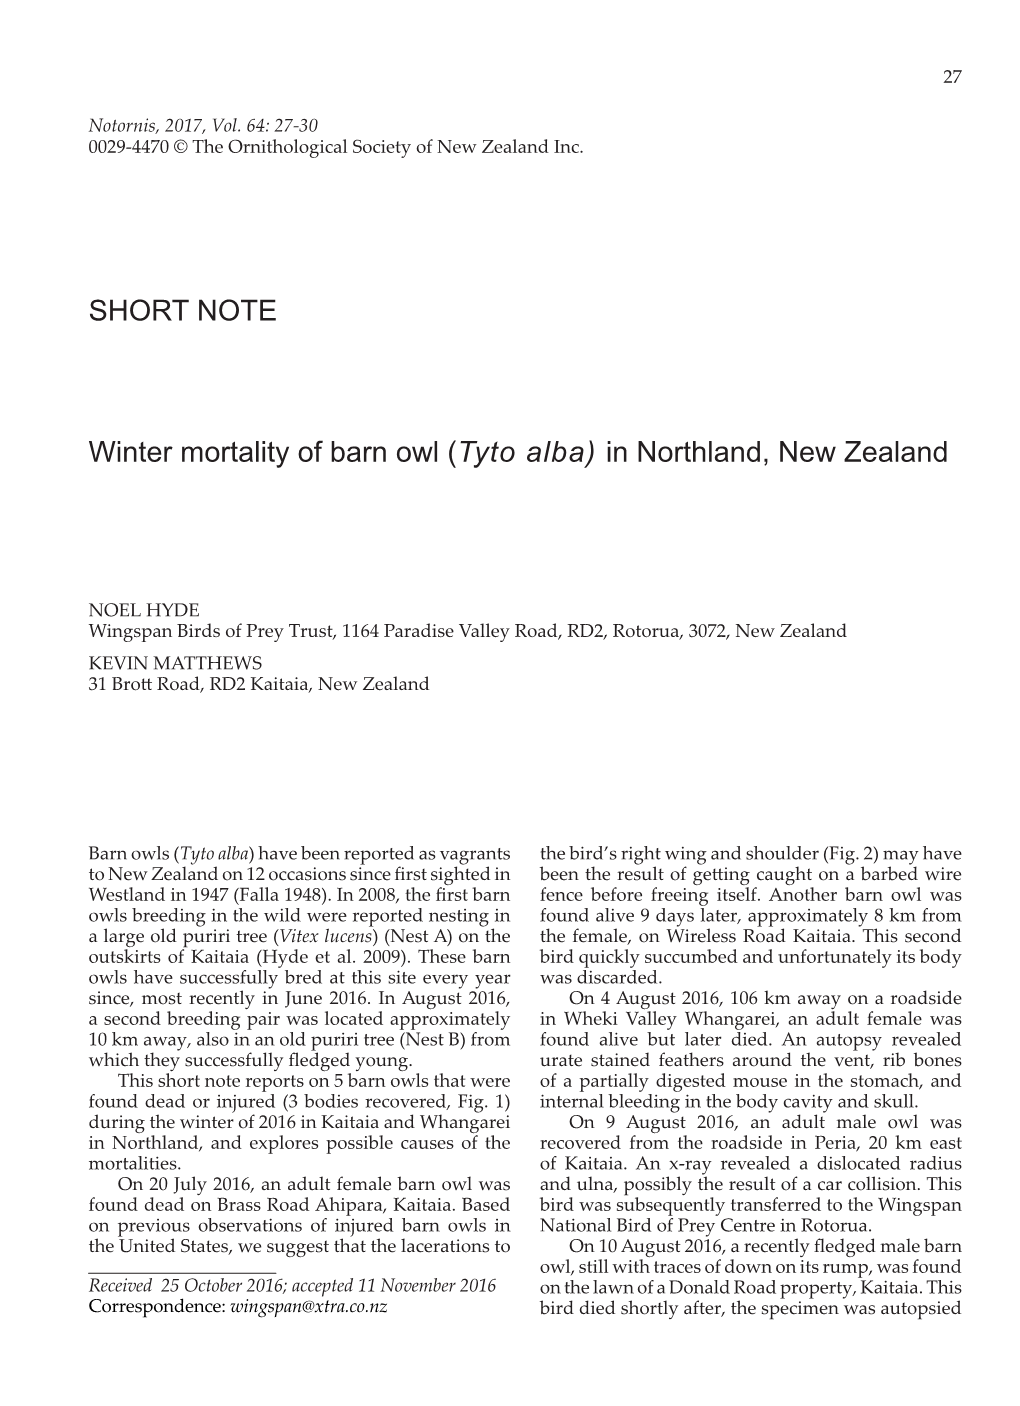 SHORT NOTE Winter Mortality of Barn